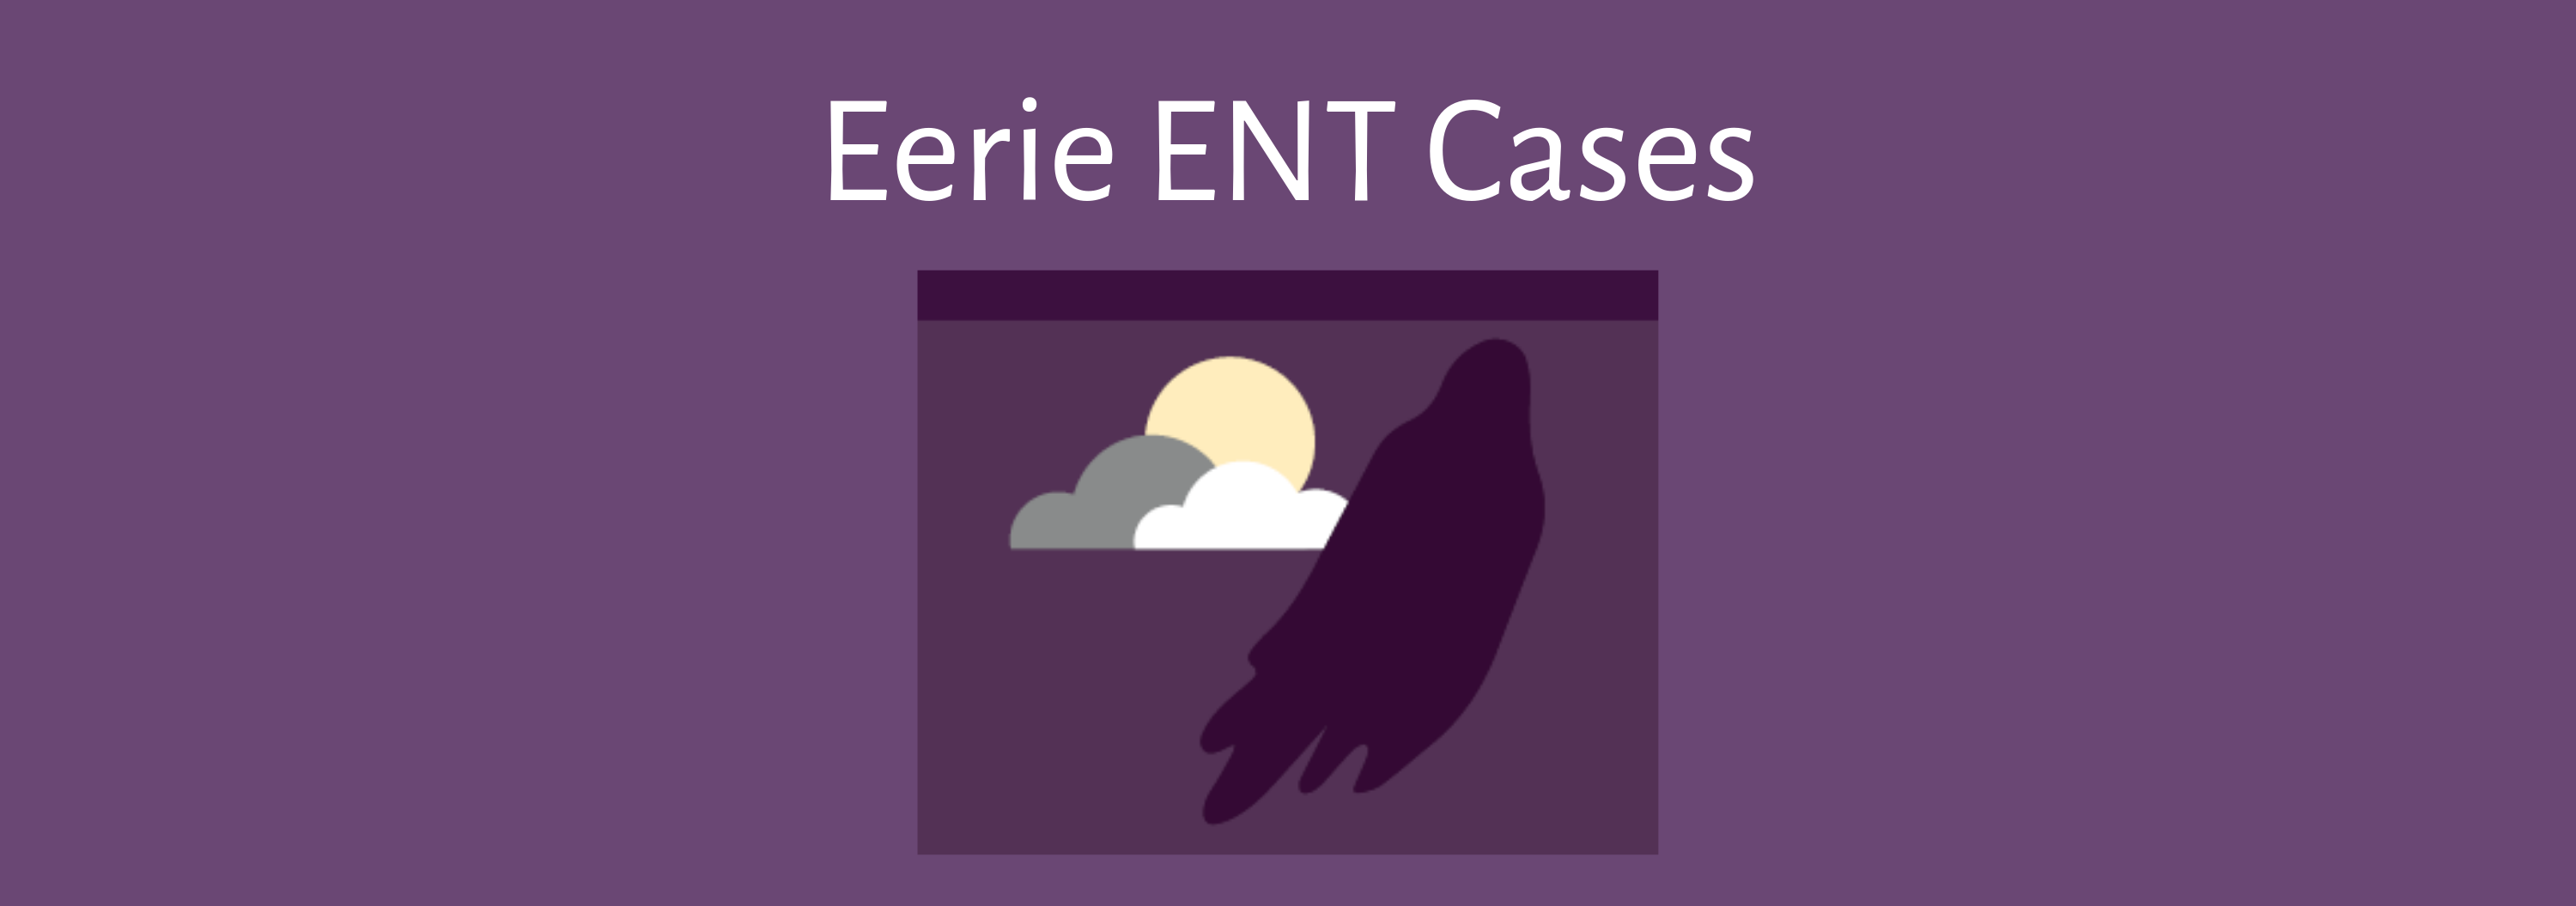 2019 Eerie ENT Cases Banner